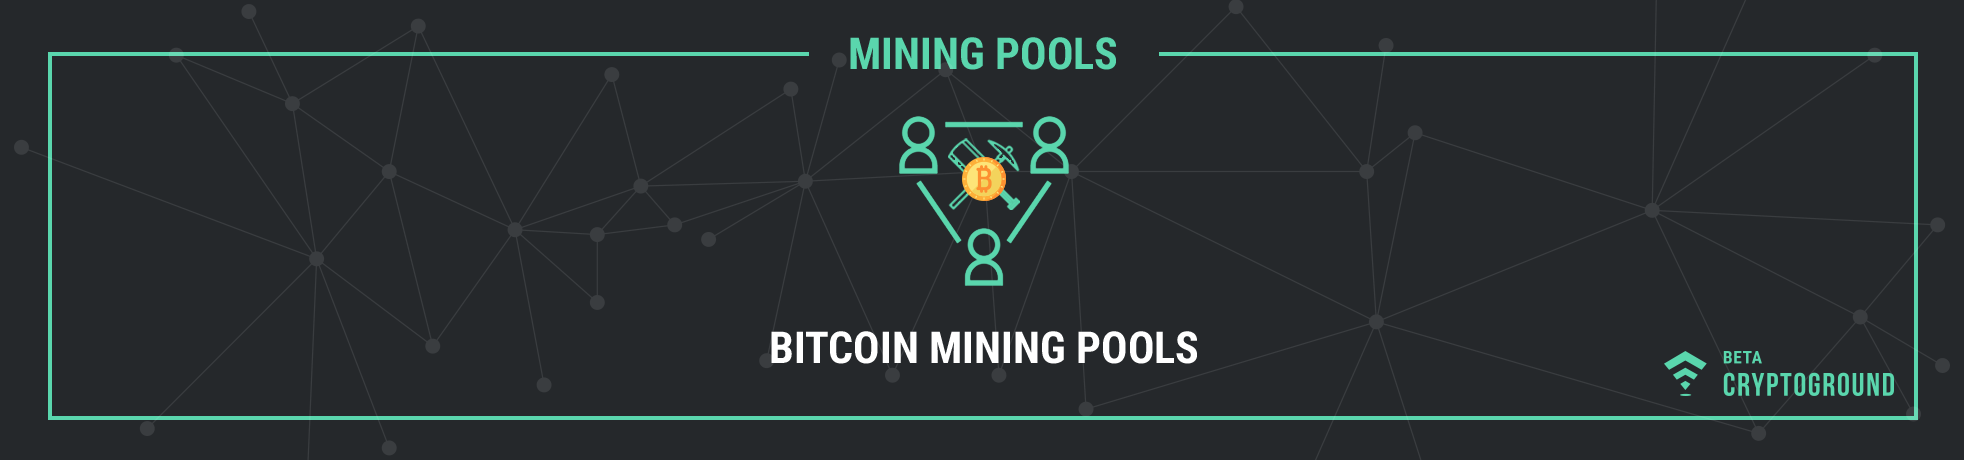 Bitcoin Mining Pools